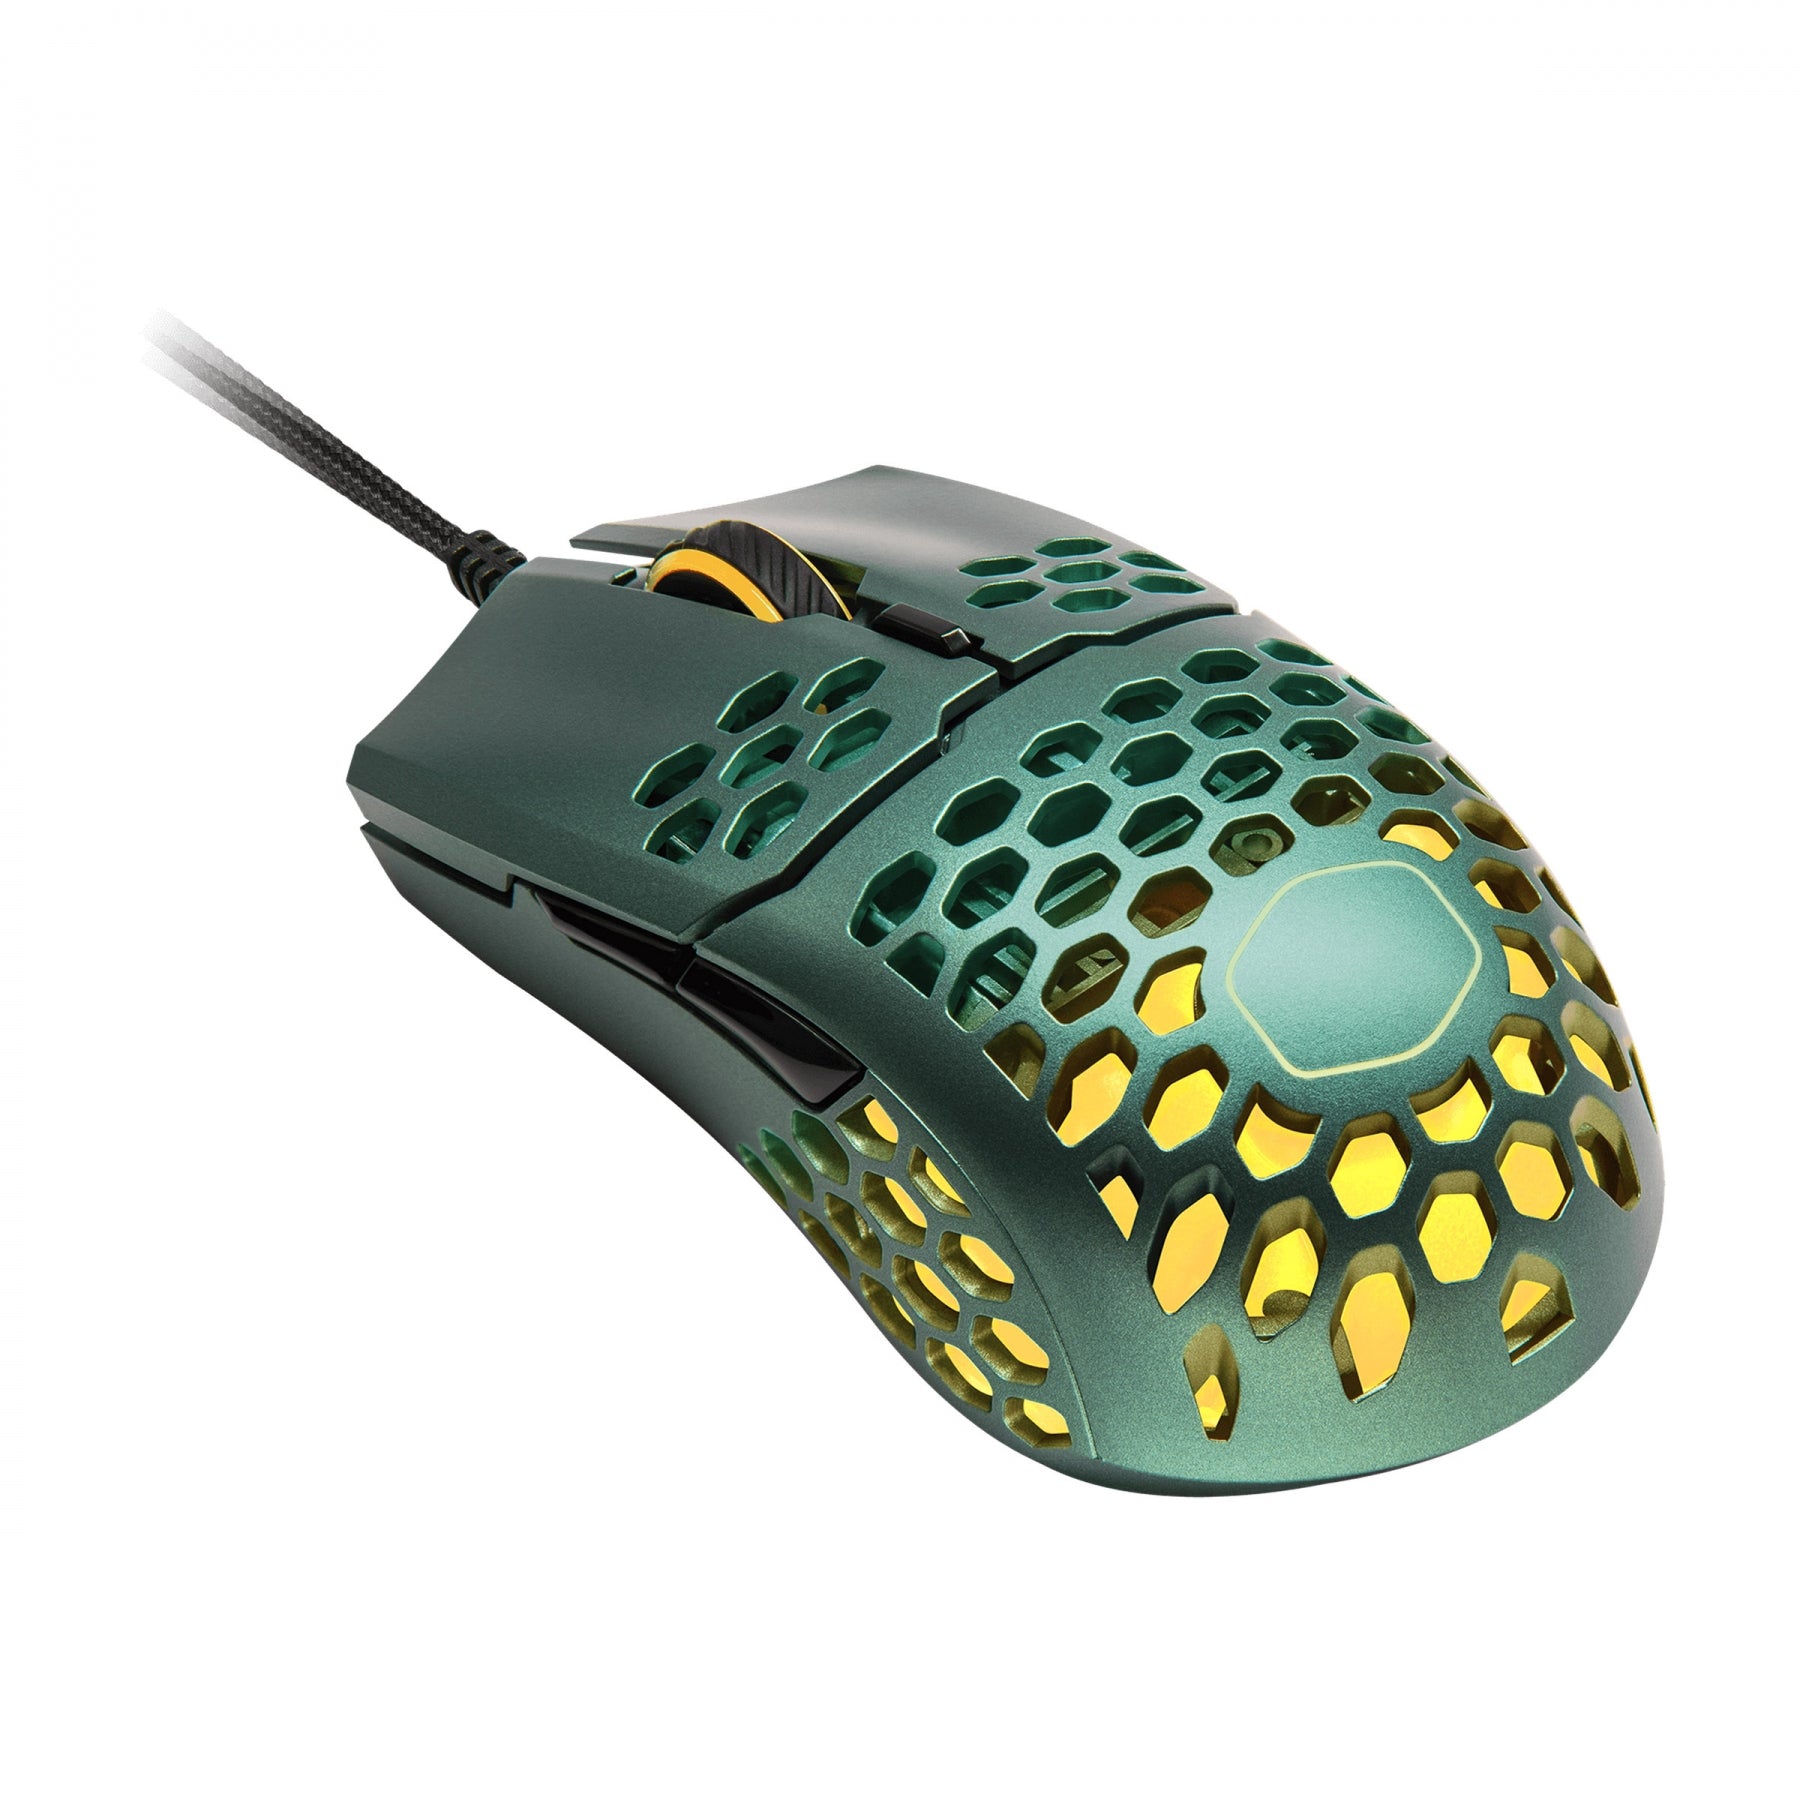 Cooler Master MM711 Olive Green Lightweight Gaming Mouse W/ Honeycomb Shell MKVITUMX2V |33408|